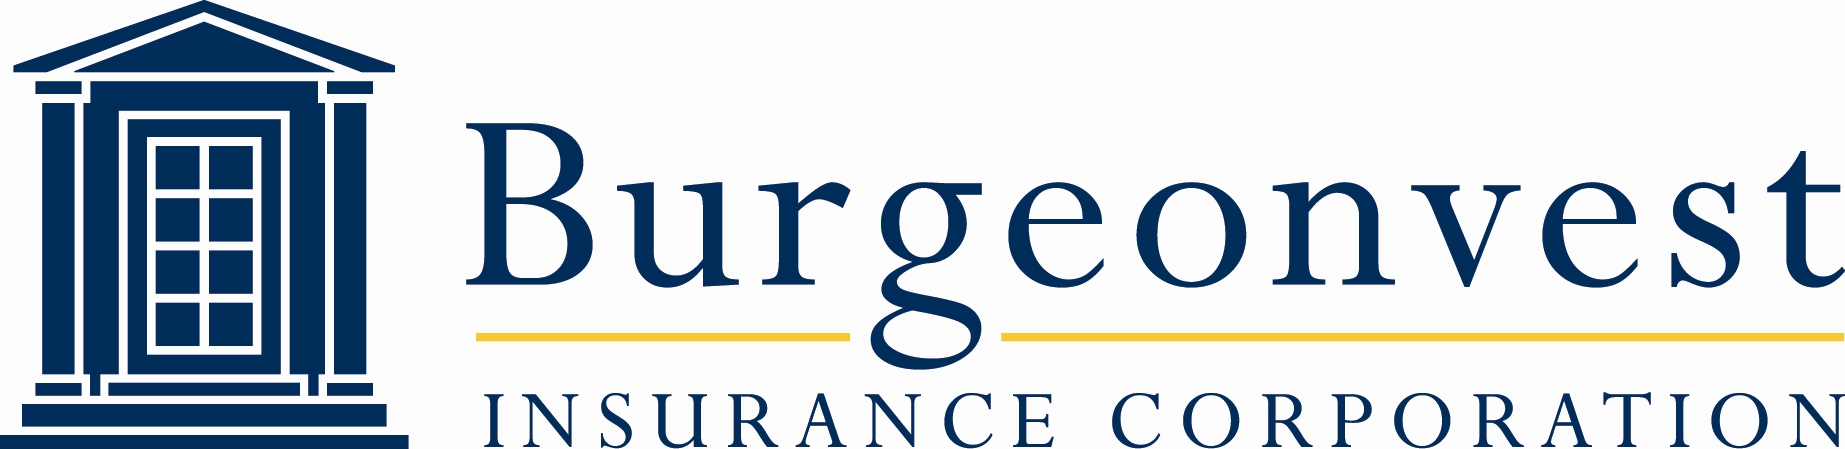 Burgeonvest Insurance Corporation